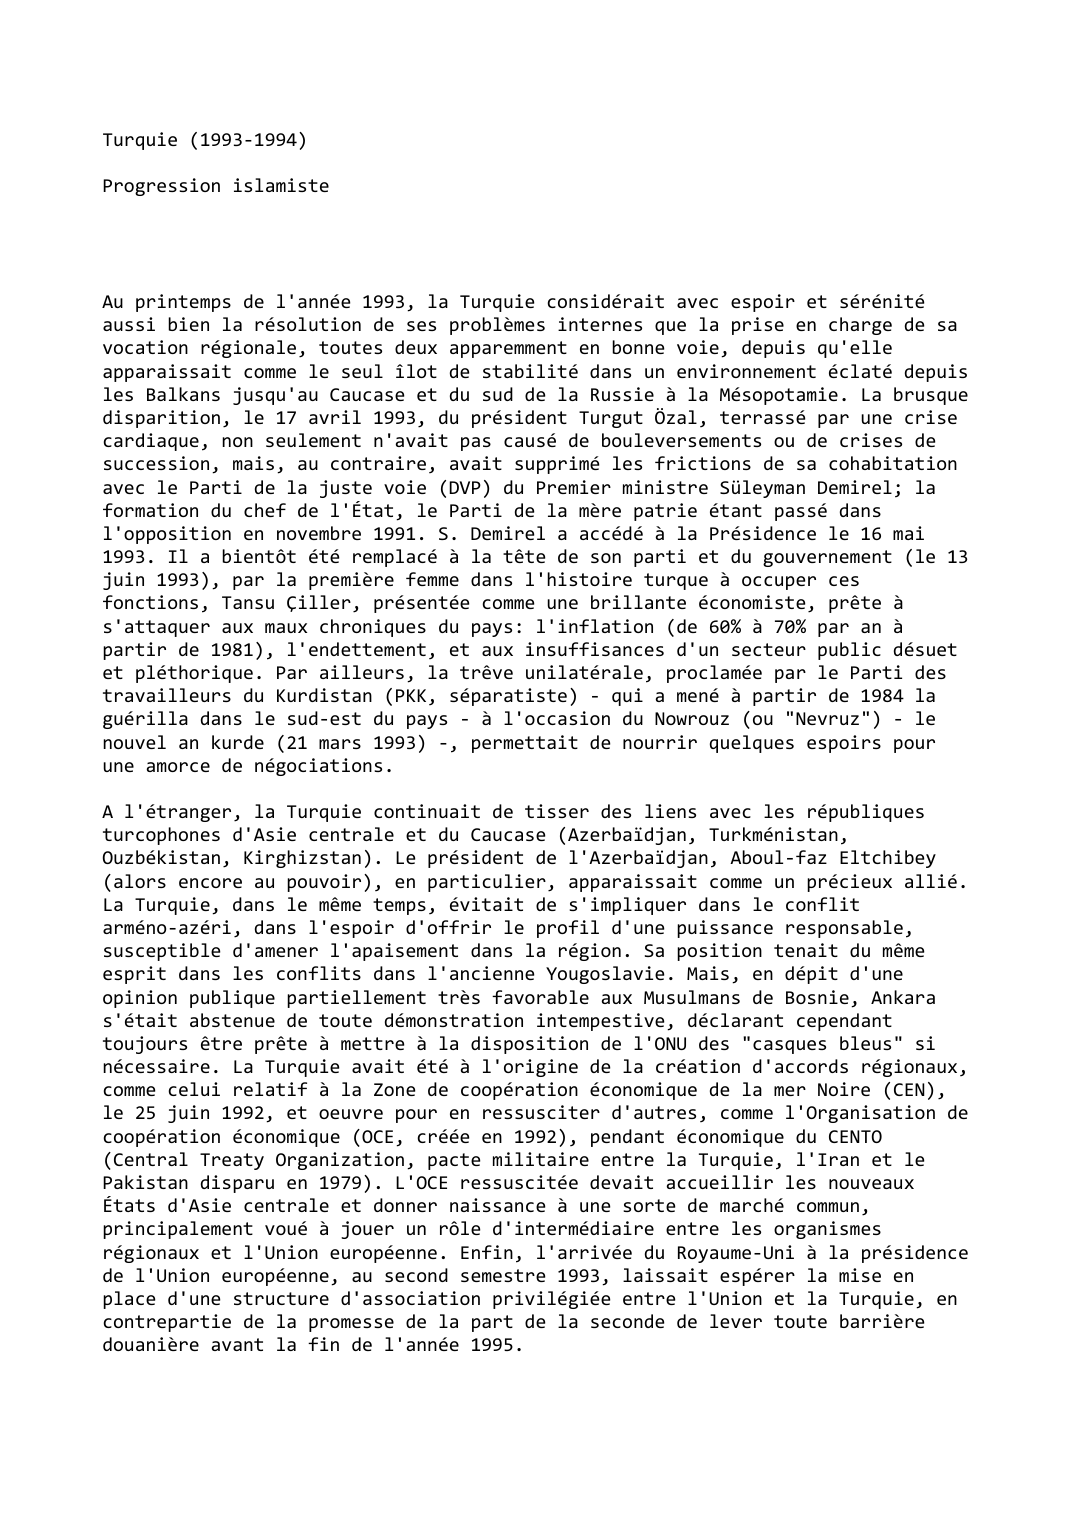 Prévisualisation du document Turquie (1993-1994)

Progression islamiste